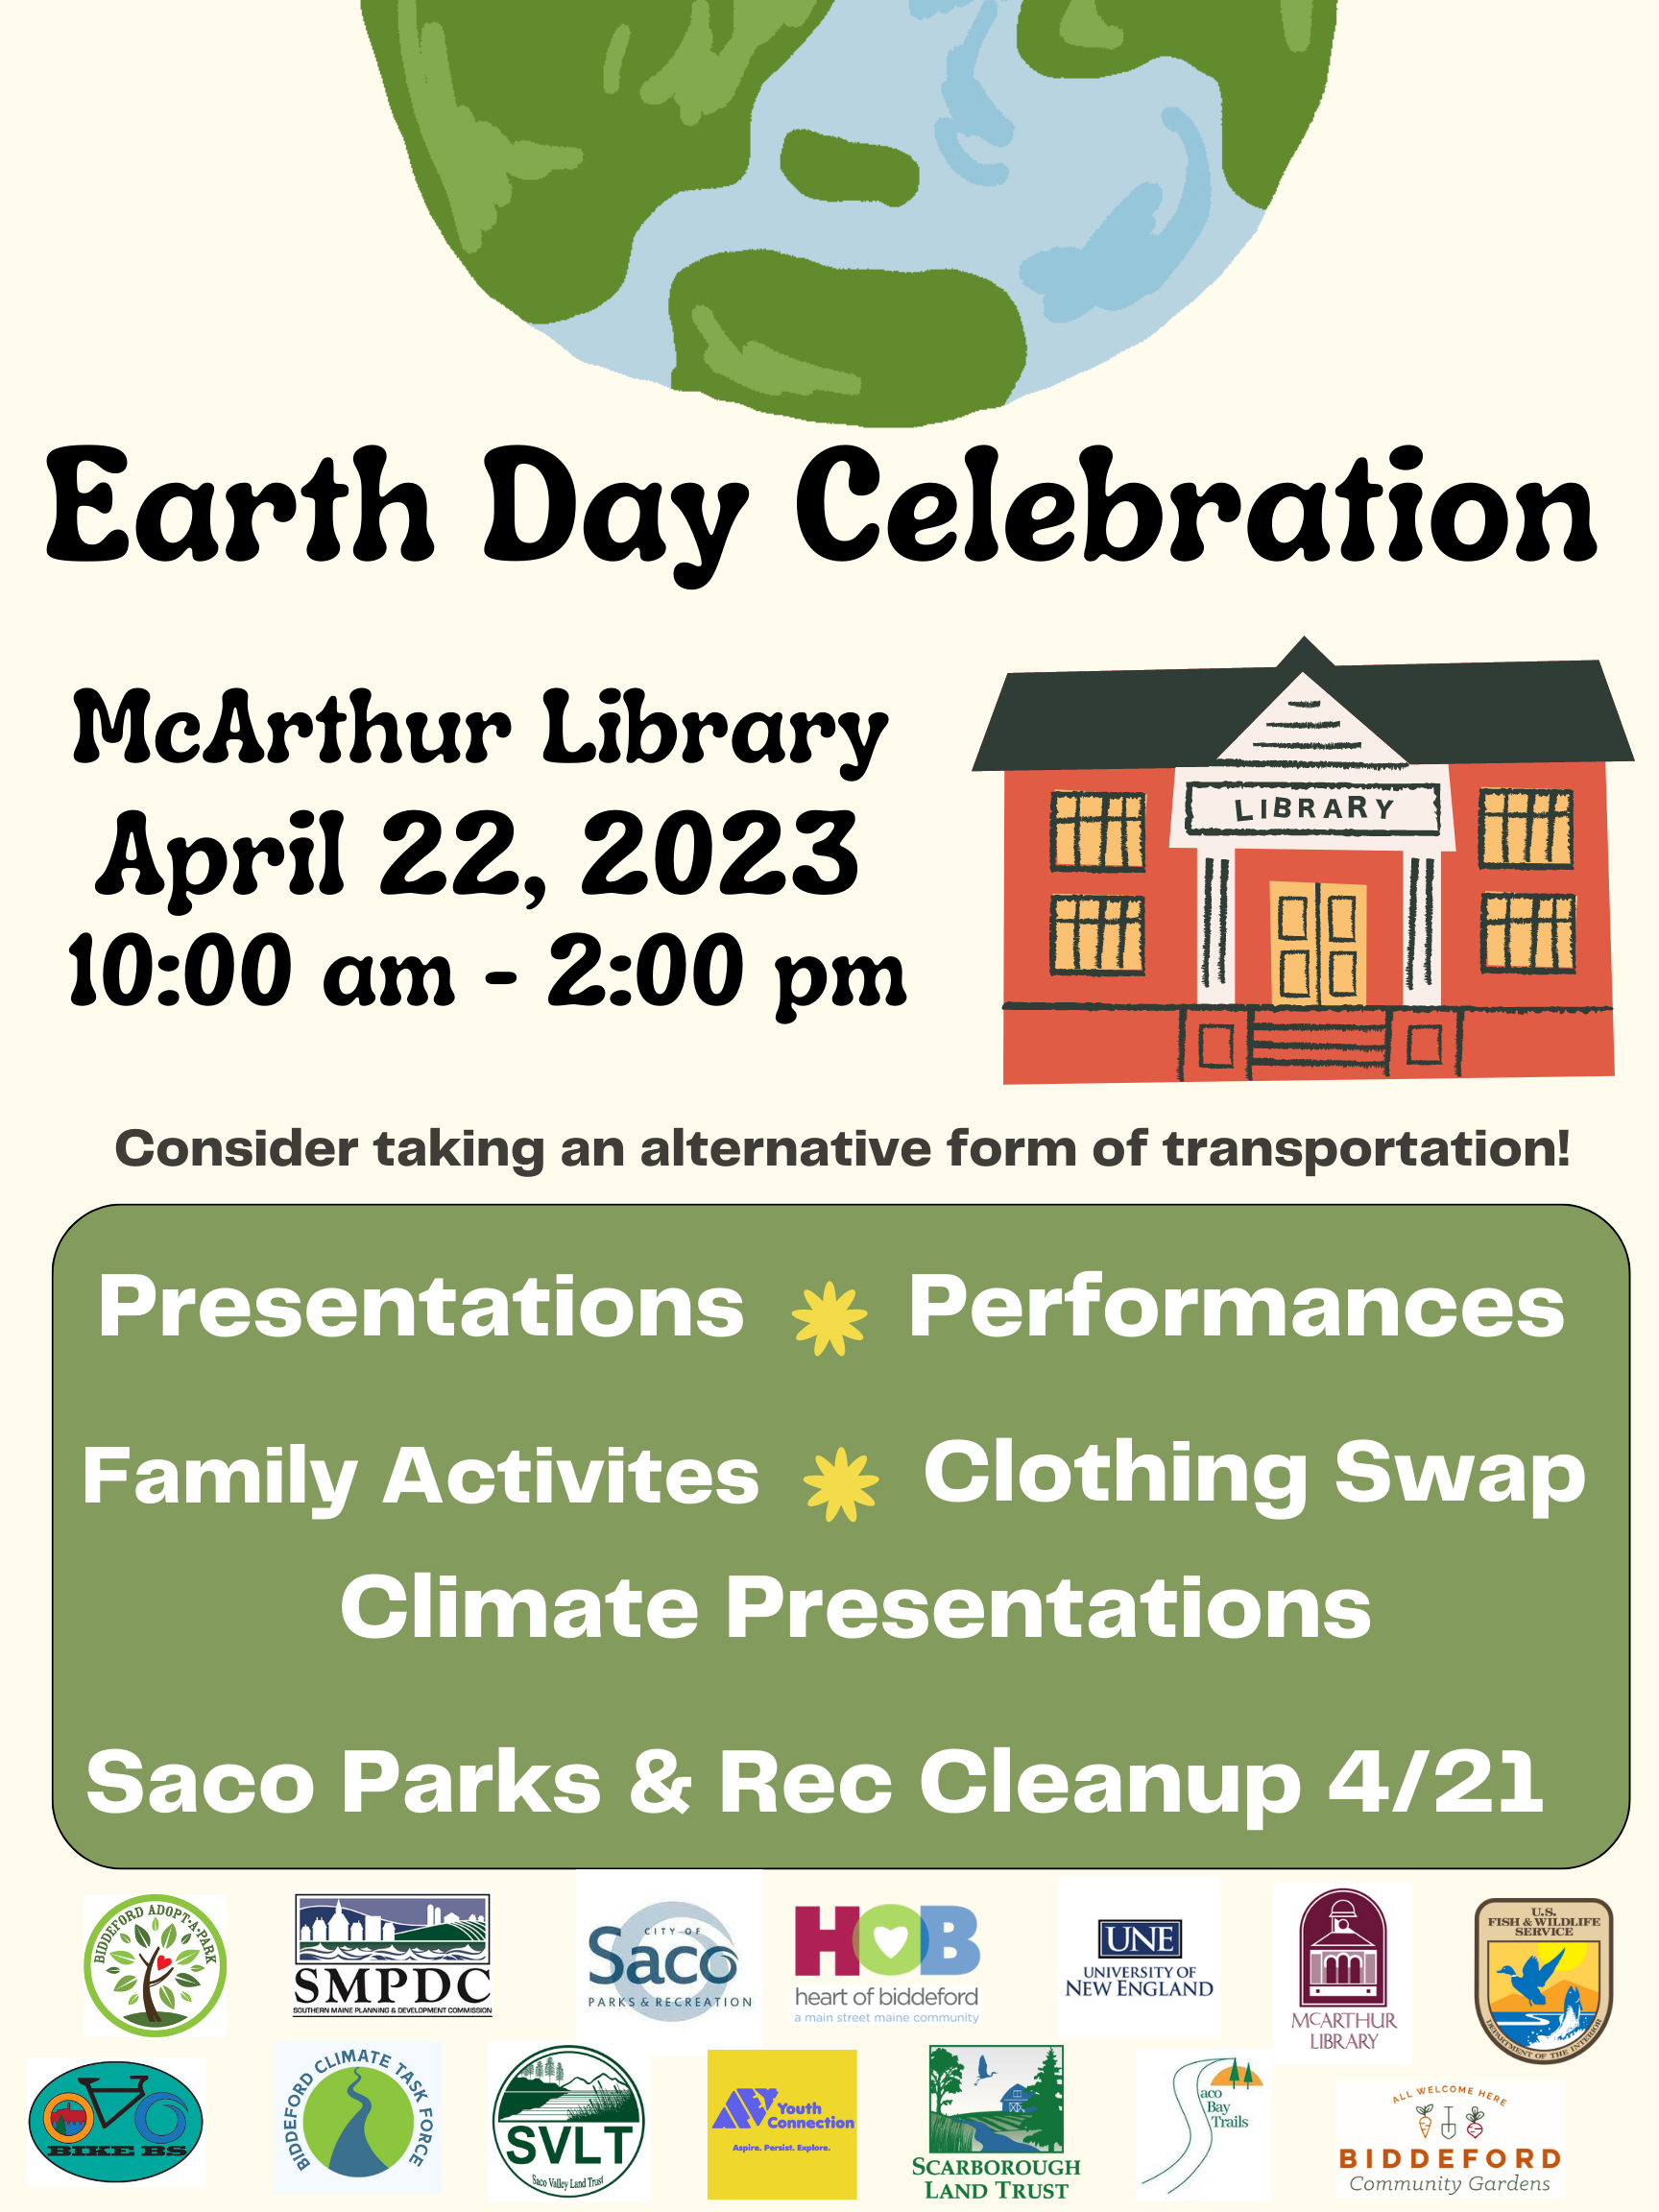 McArthur Library Earth Day Celebration flyer